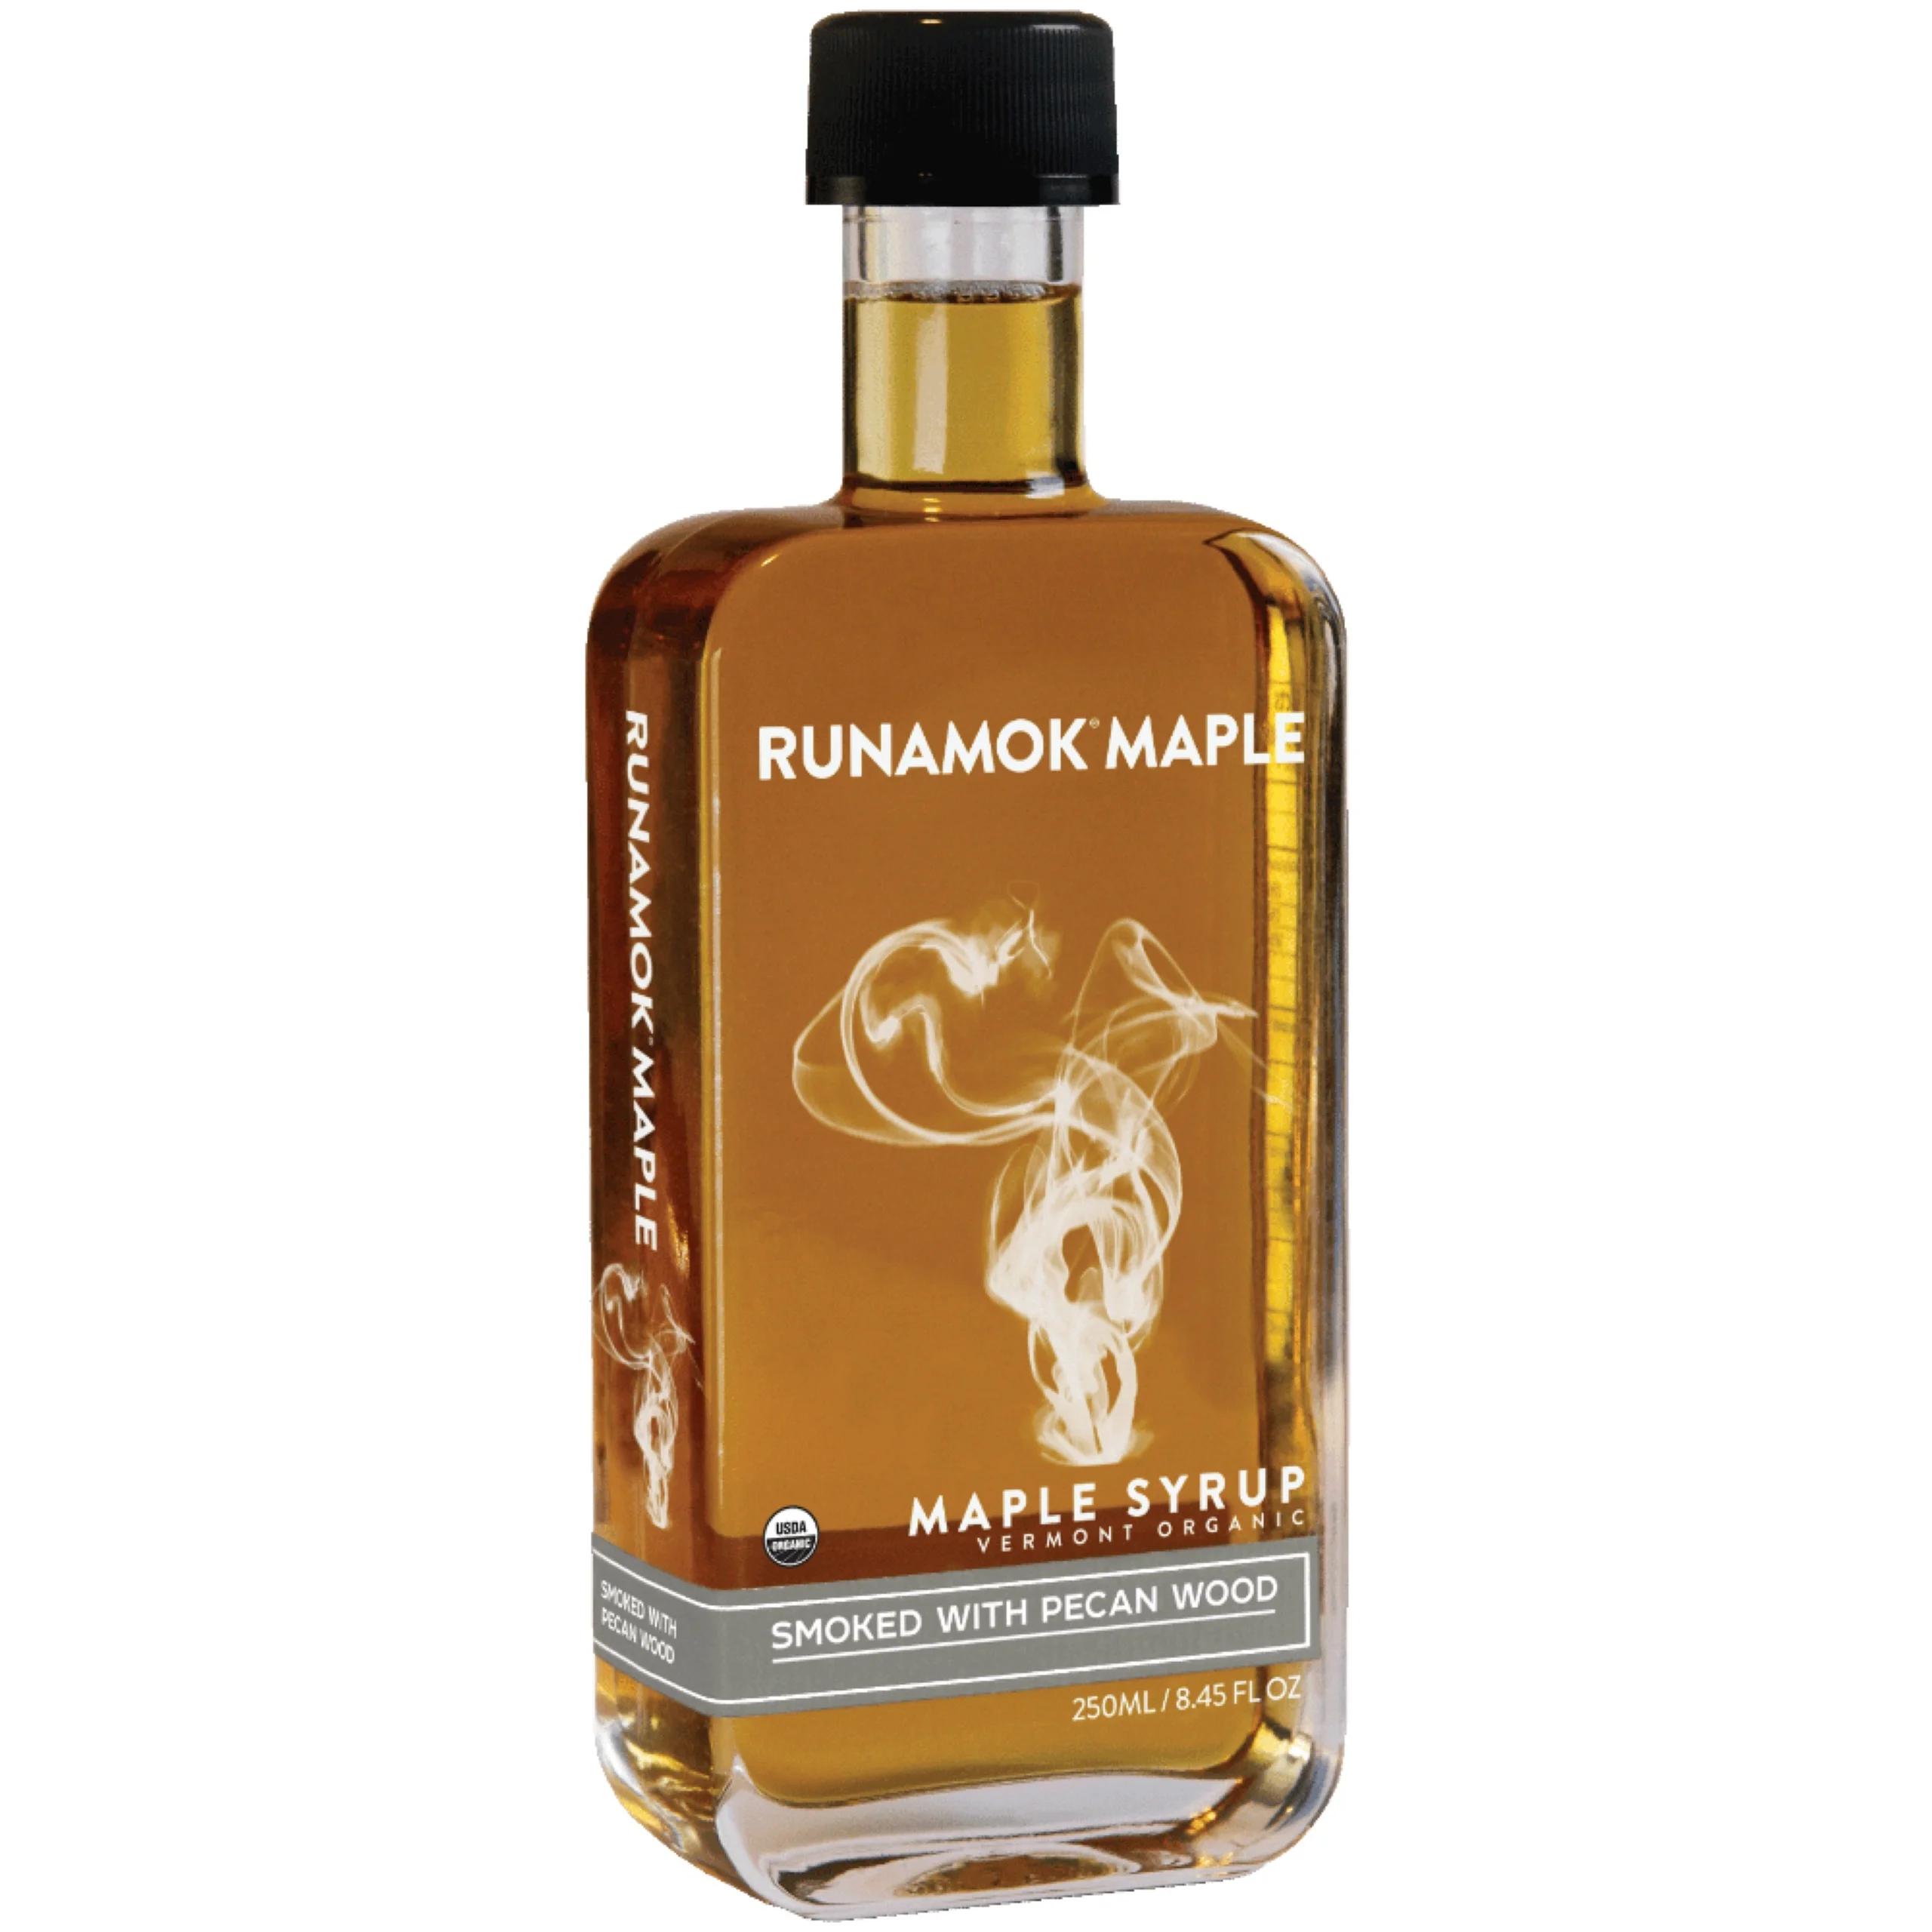 runamok smoked maple syrup - Where is Runamok maple syrup made